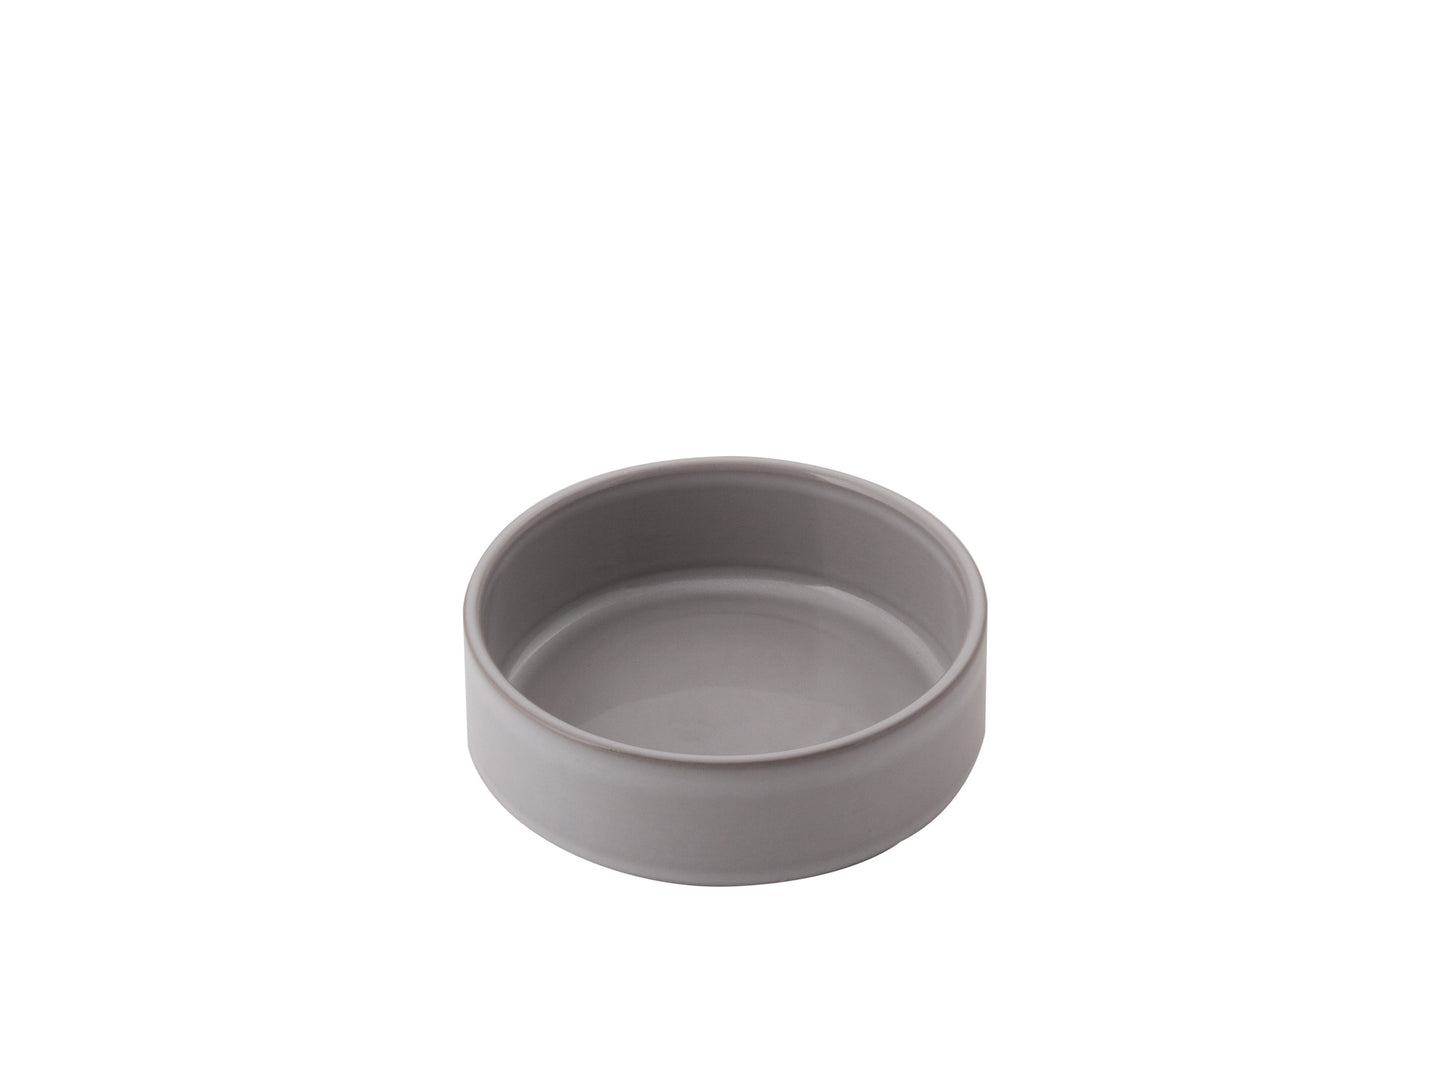 petit saladier empilable, bol / small stacking bowl — 14/5